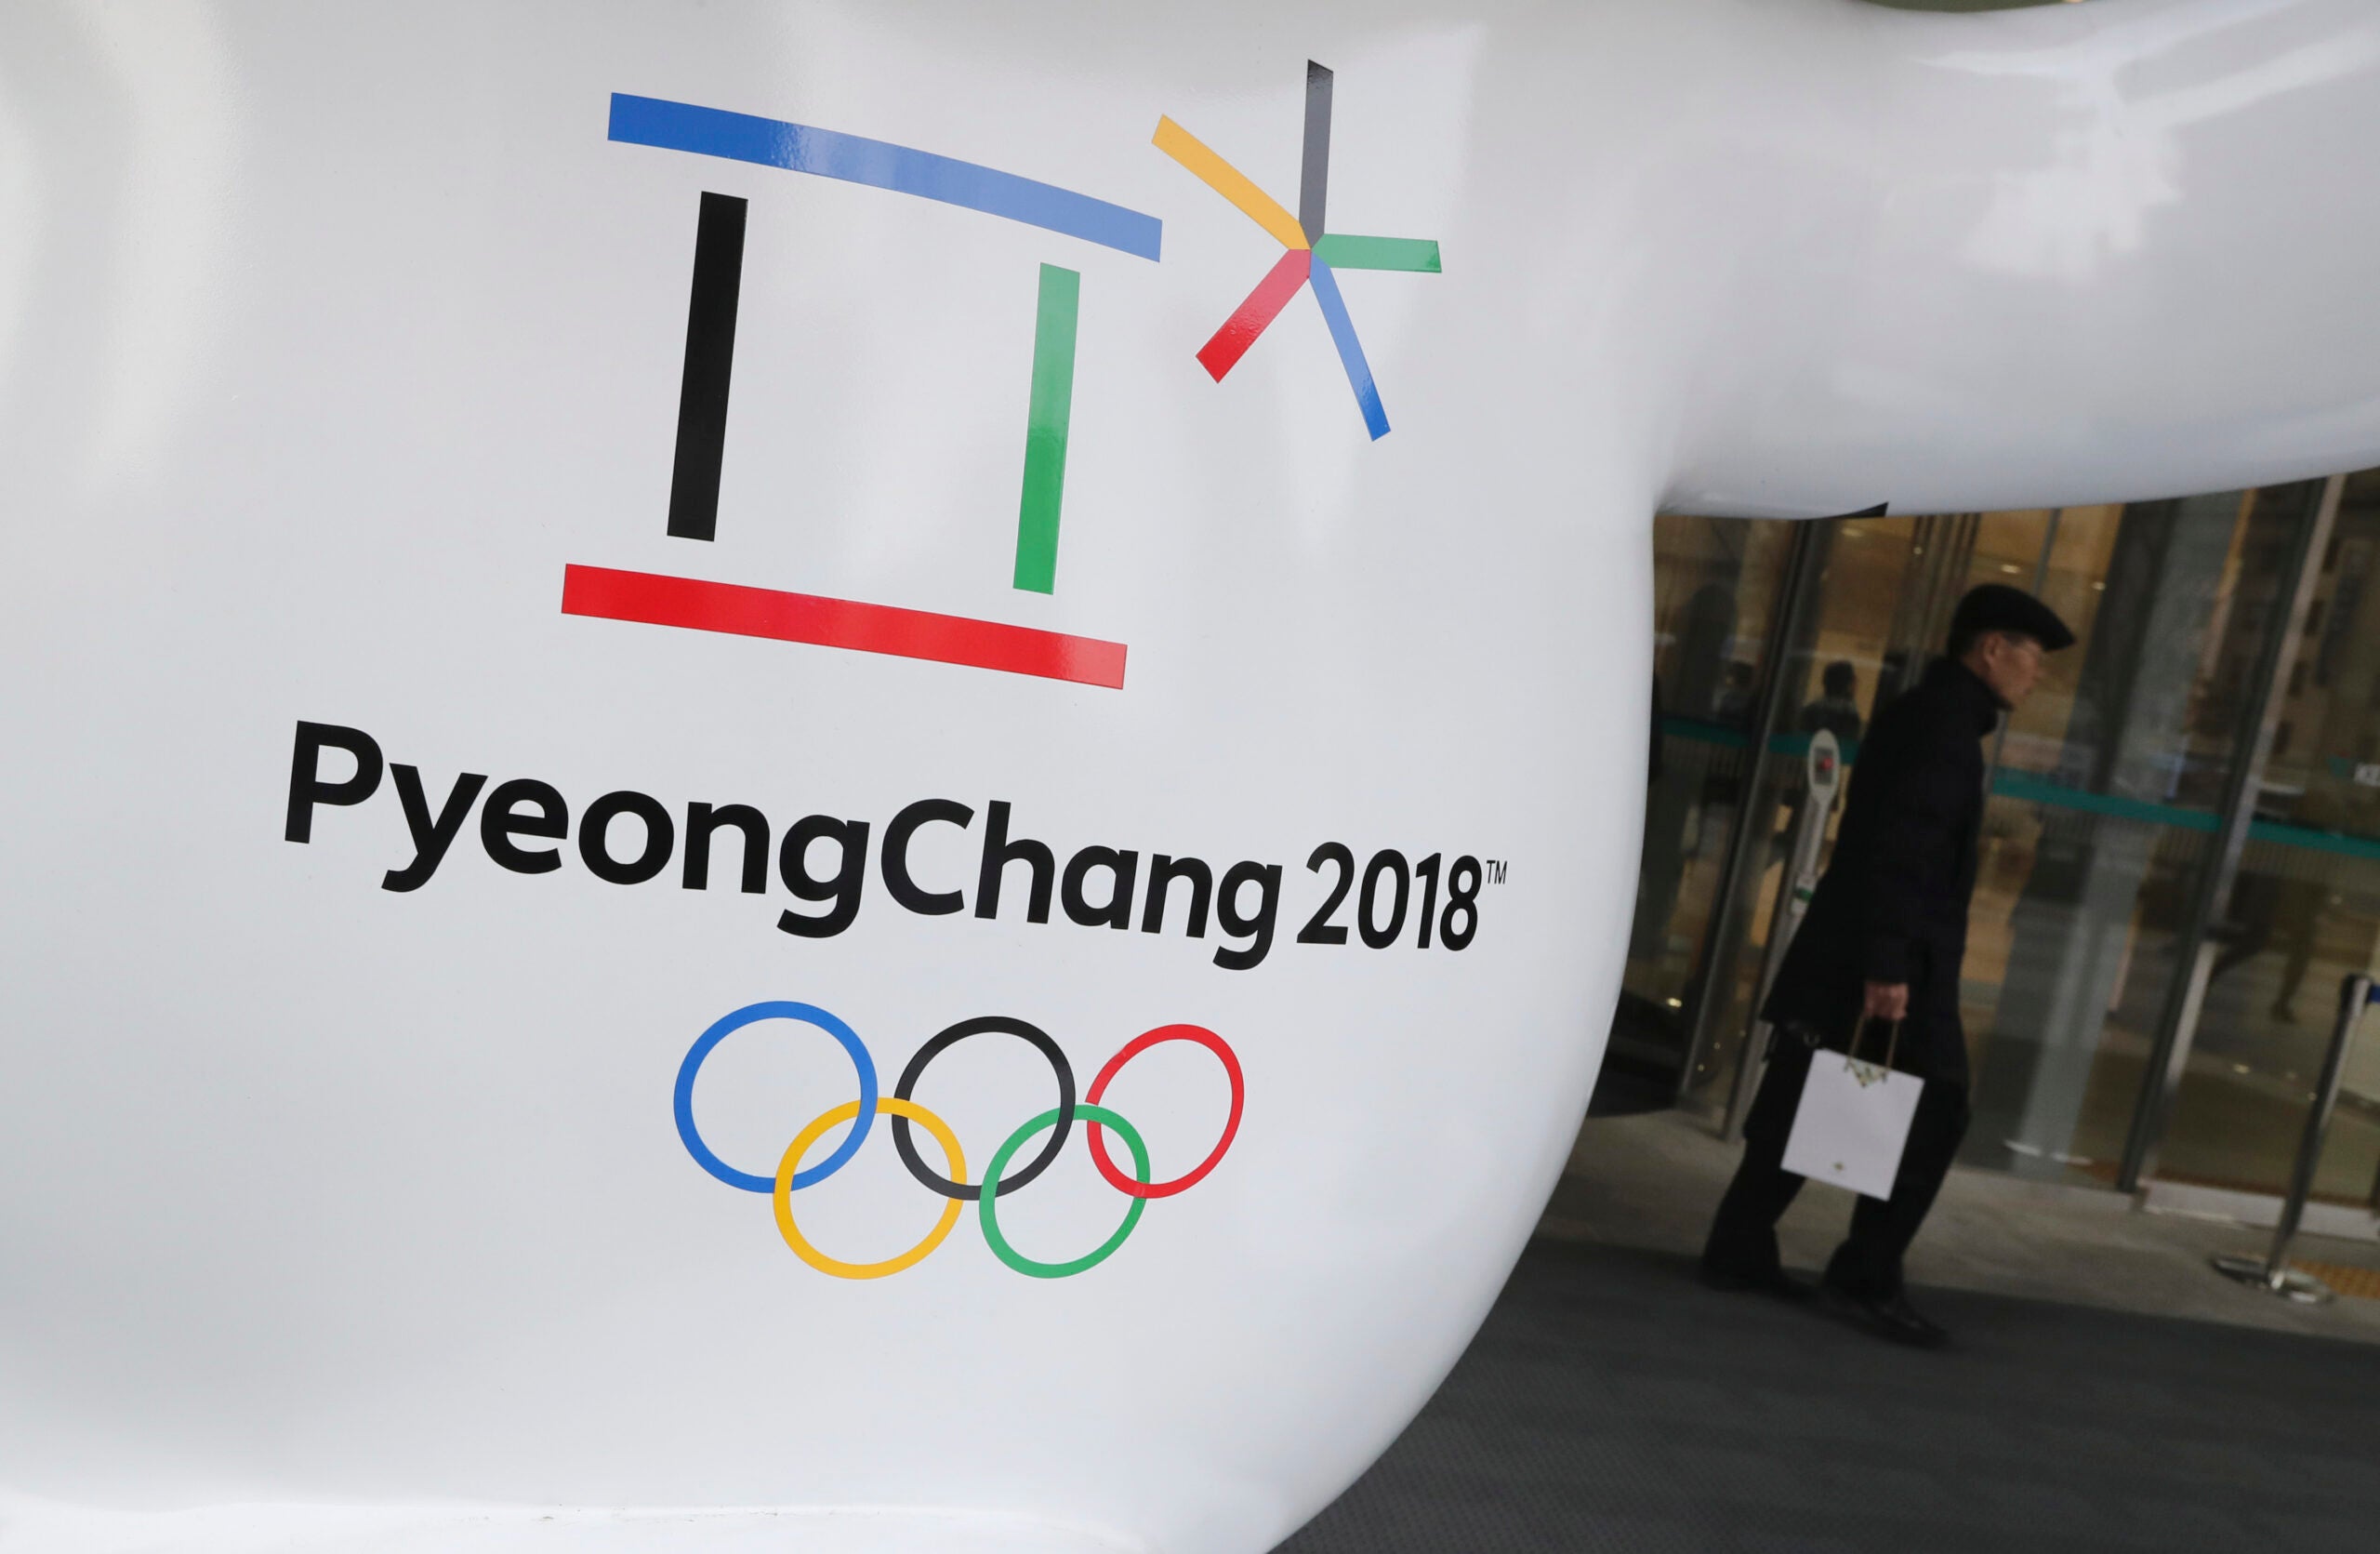 February 14, 2018 - Pyeongchang, KOREA - Shaun White (USA) mom